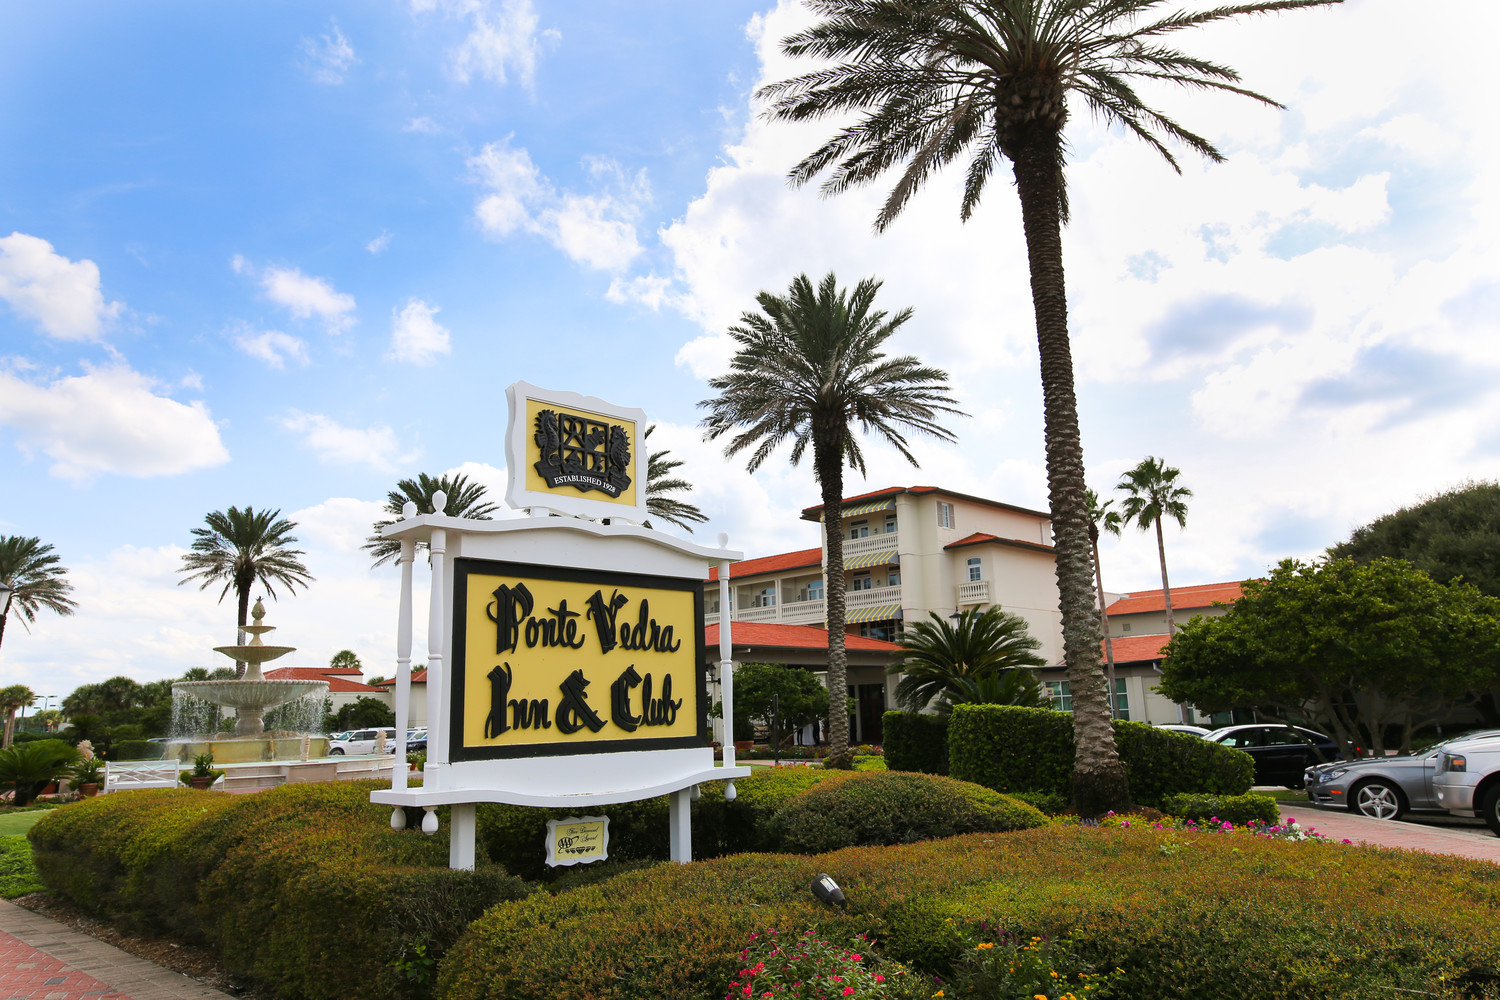 Ponte Vedra Inn & Club is located at 200 Ponte Vedra Blvd. in Ponte Vedra Beach.